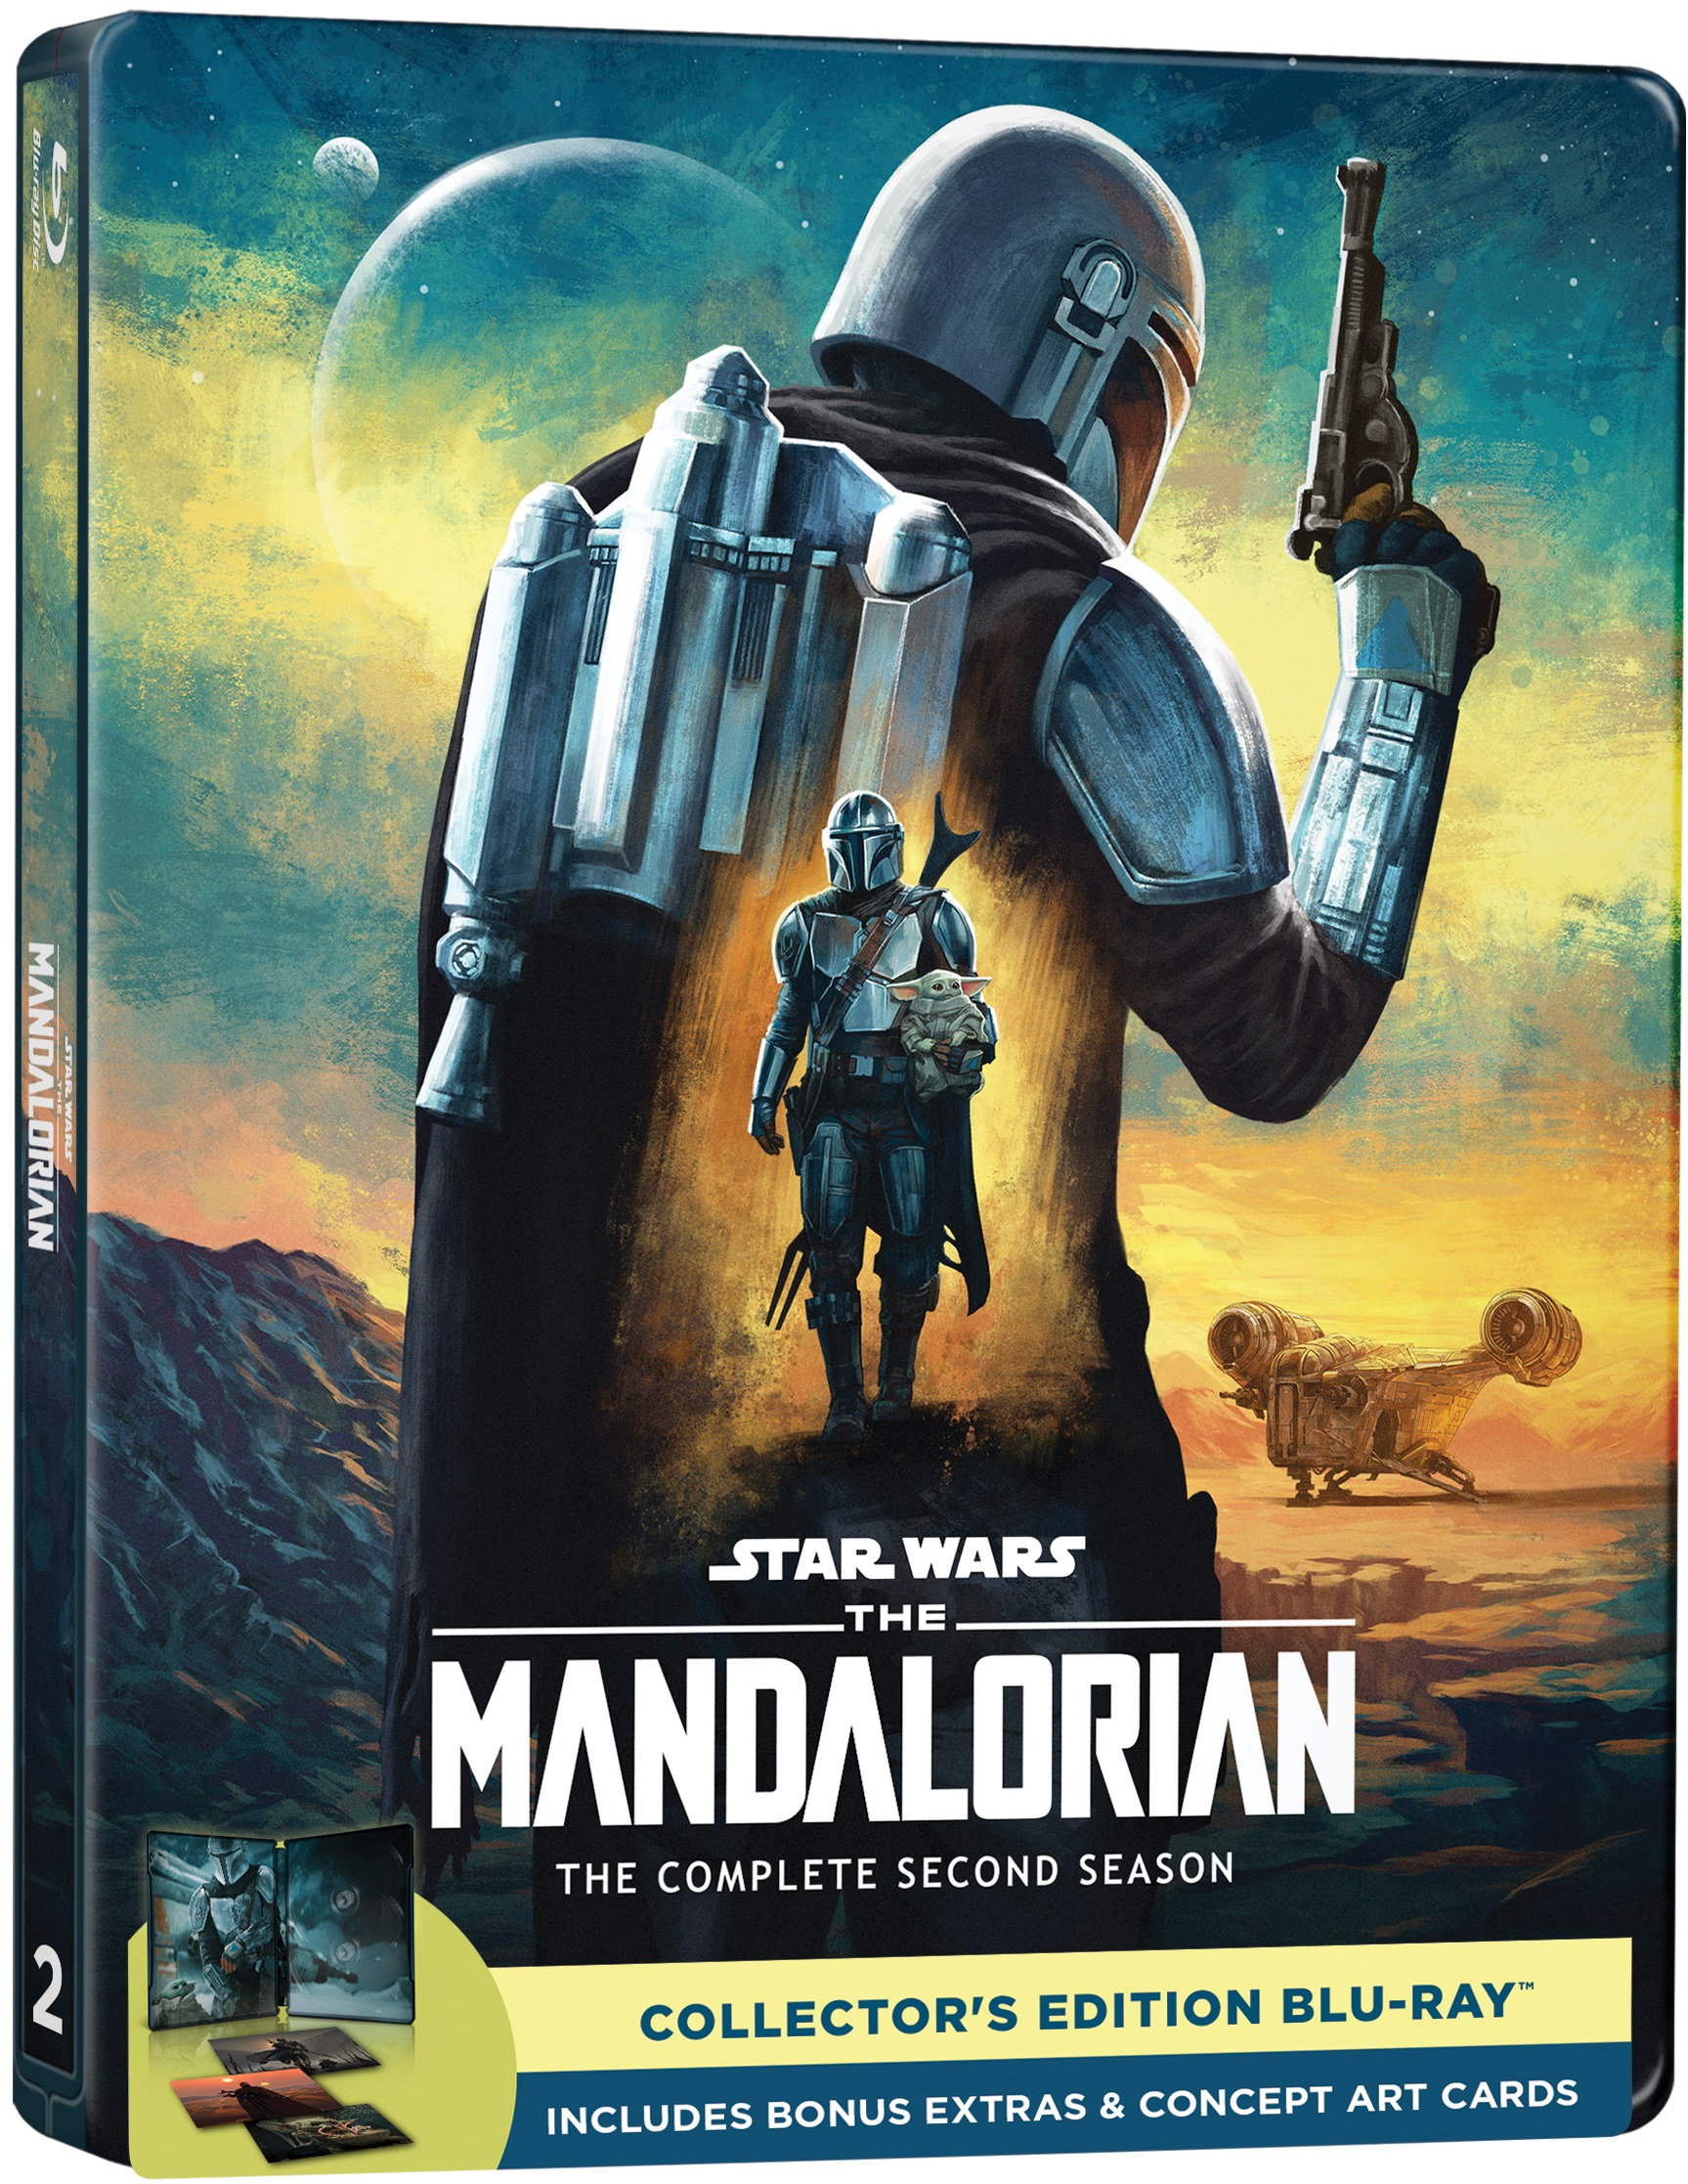 The Mandalorian: The Complete Second Season (Blu-Ray Steelbook) (Disney) - image 1 of 3